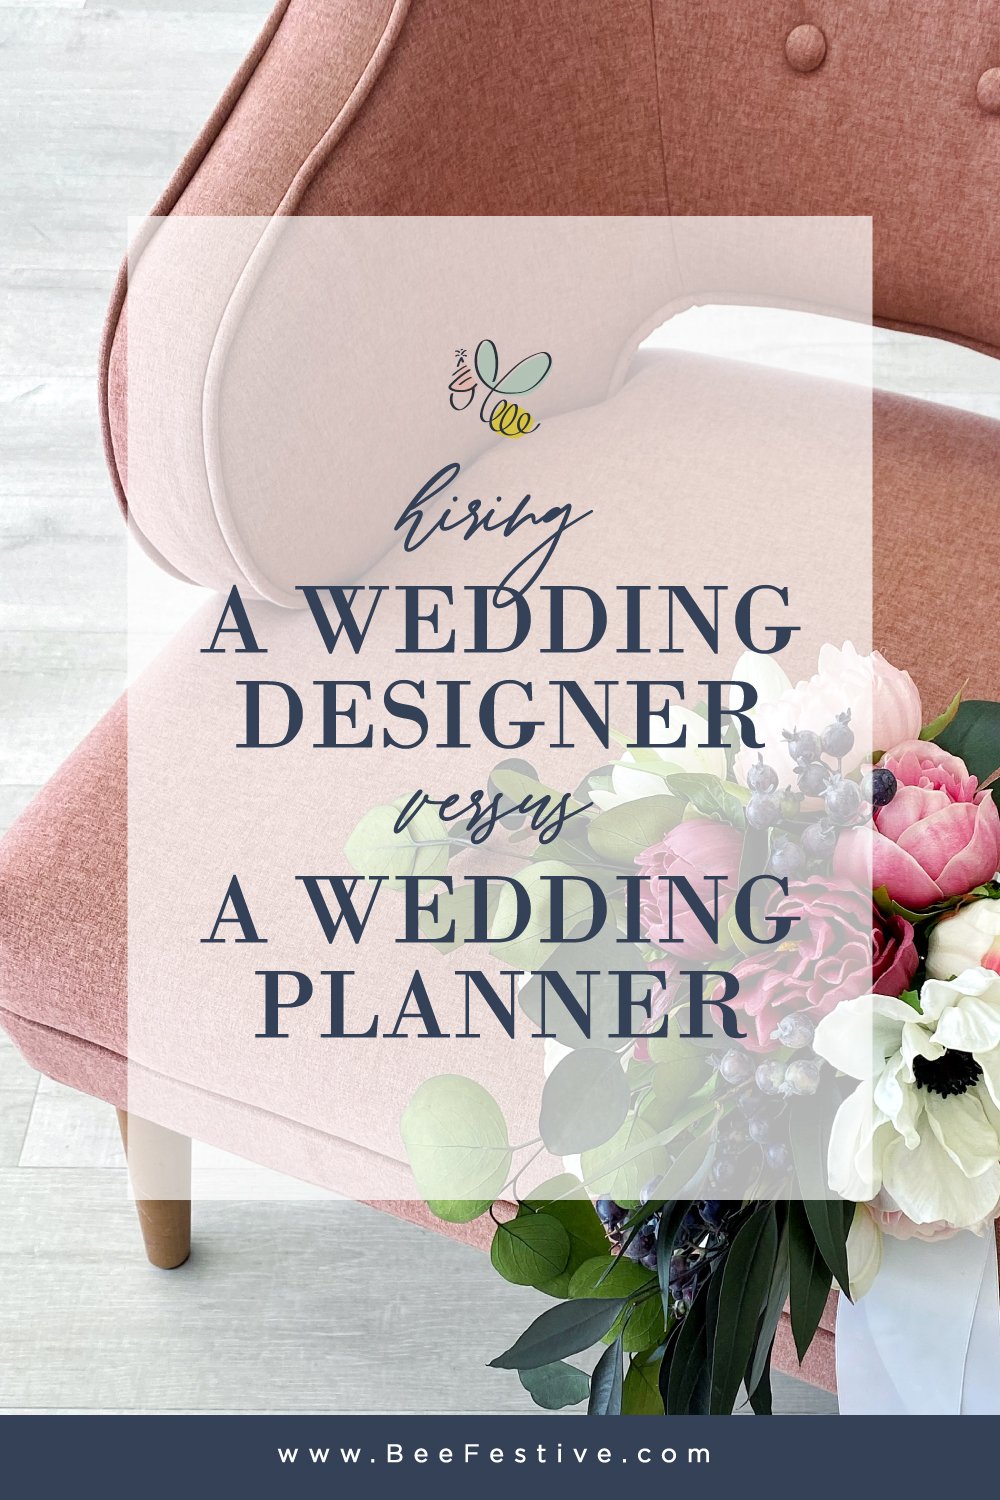 Bee-Festive-Wedding-Designer-Versus-Wedding-Planner-Pinterest-Graphic-Pink-Chair-Bouquet-January2021.jpg